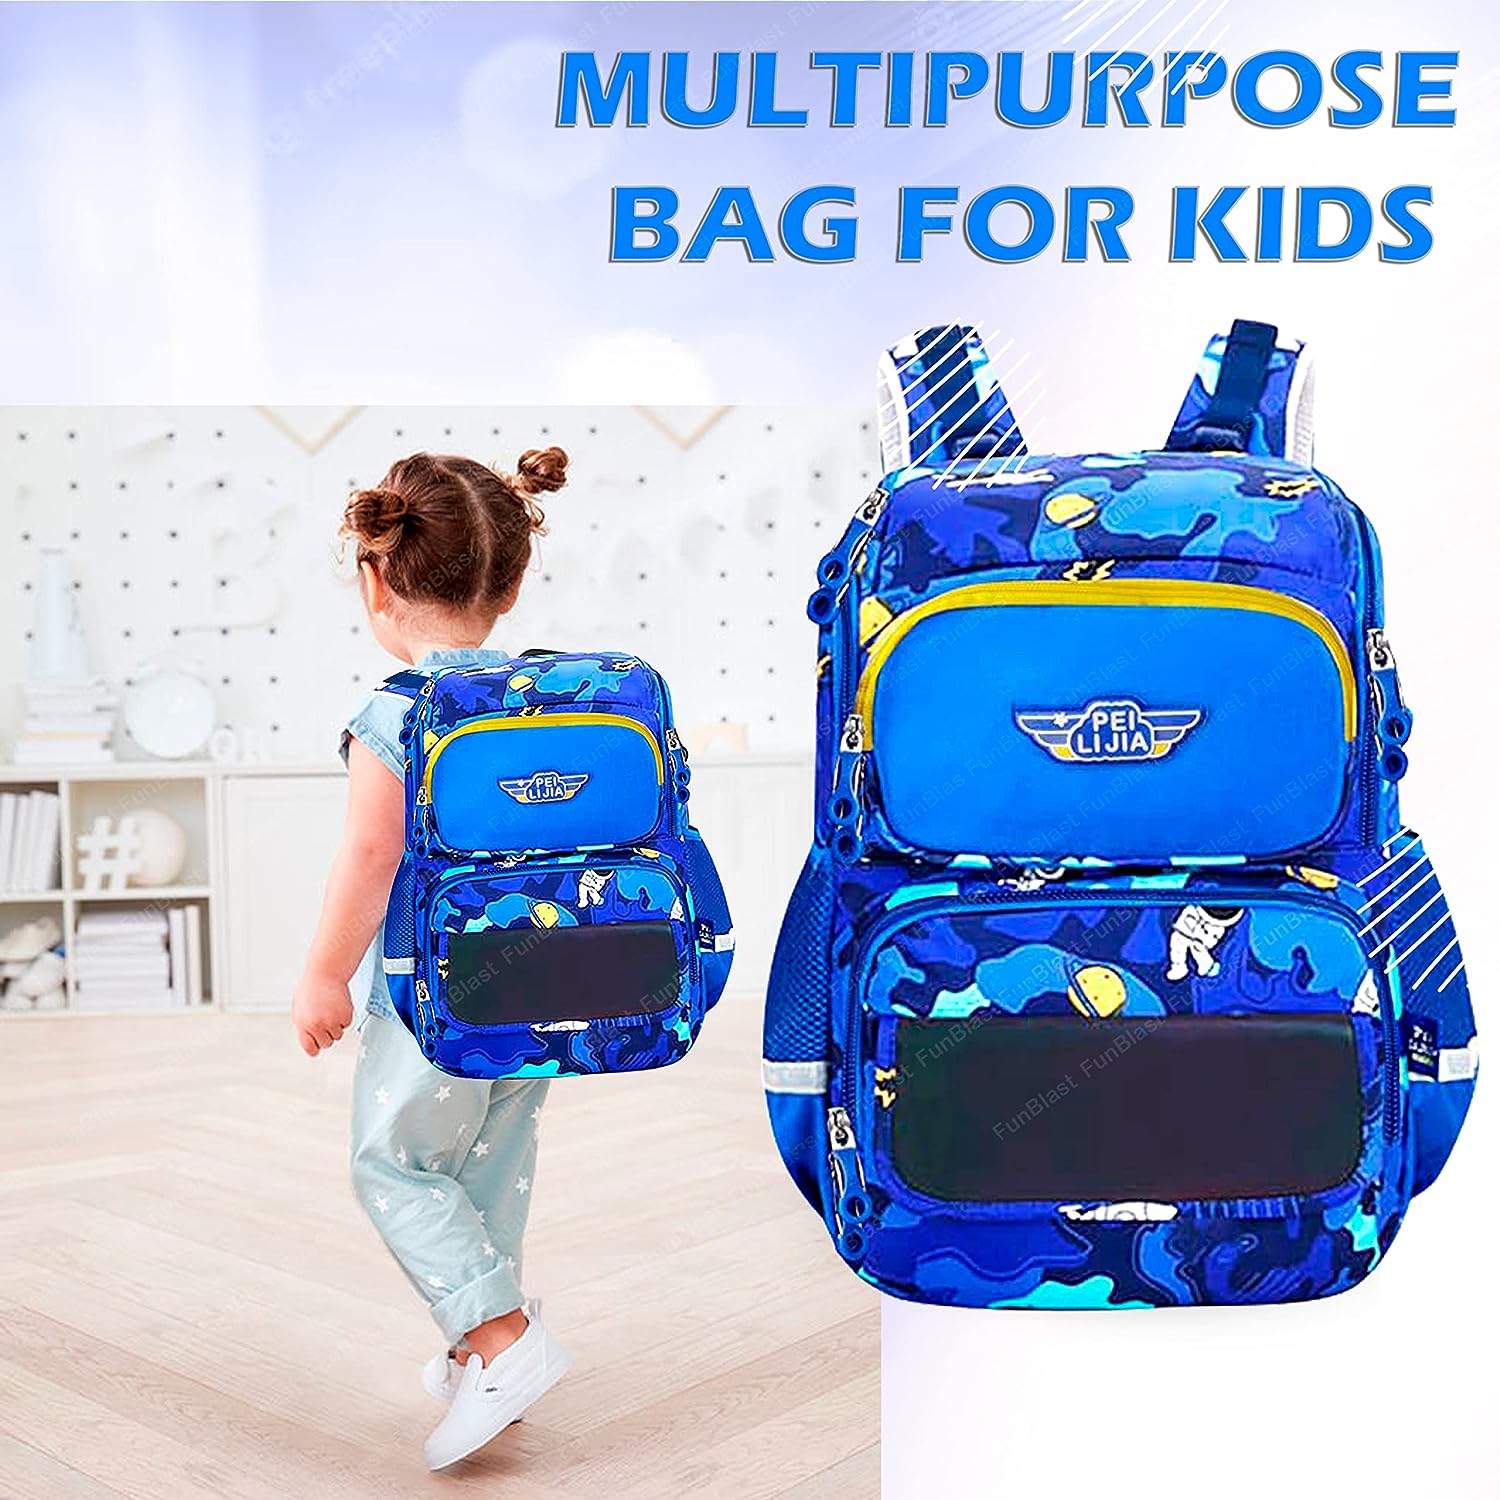 Space Backpack for Children - School Bag for Student, Orthopedic School Bags, Lightweight Large Capacity Bag for Boys Girls Kids, Travel Bag, Picnic Bag (39 X 28 X 14 CM)